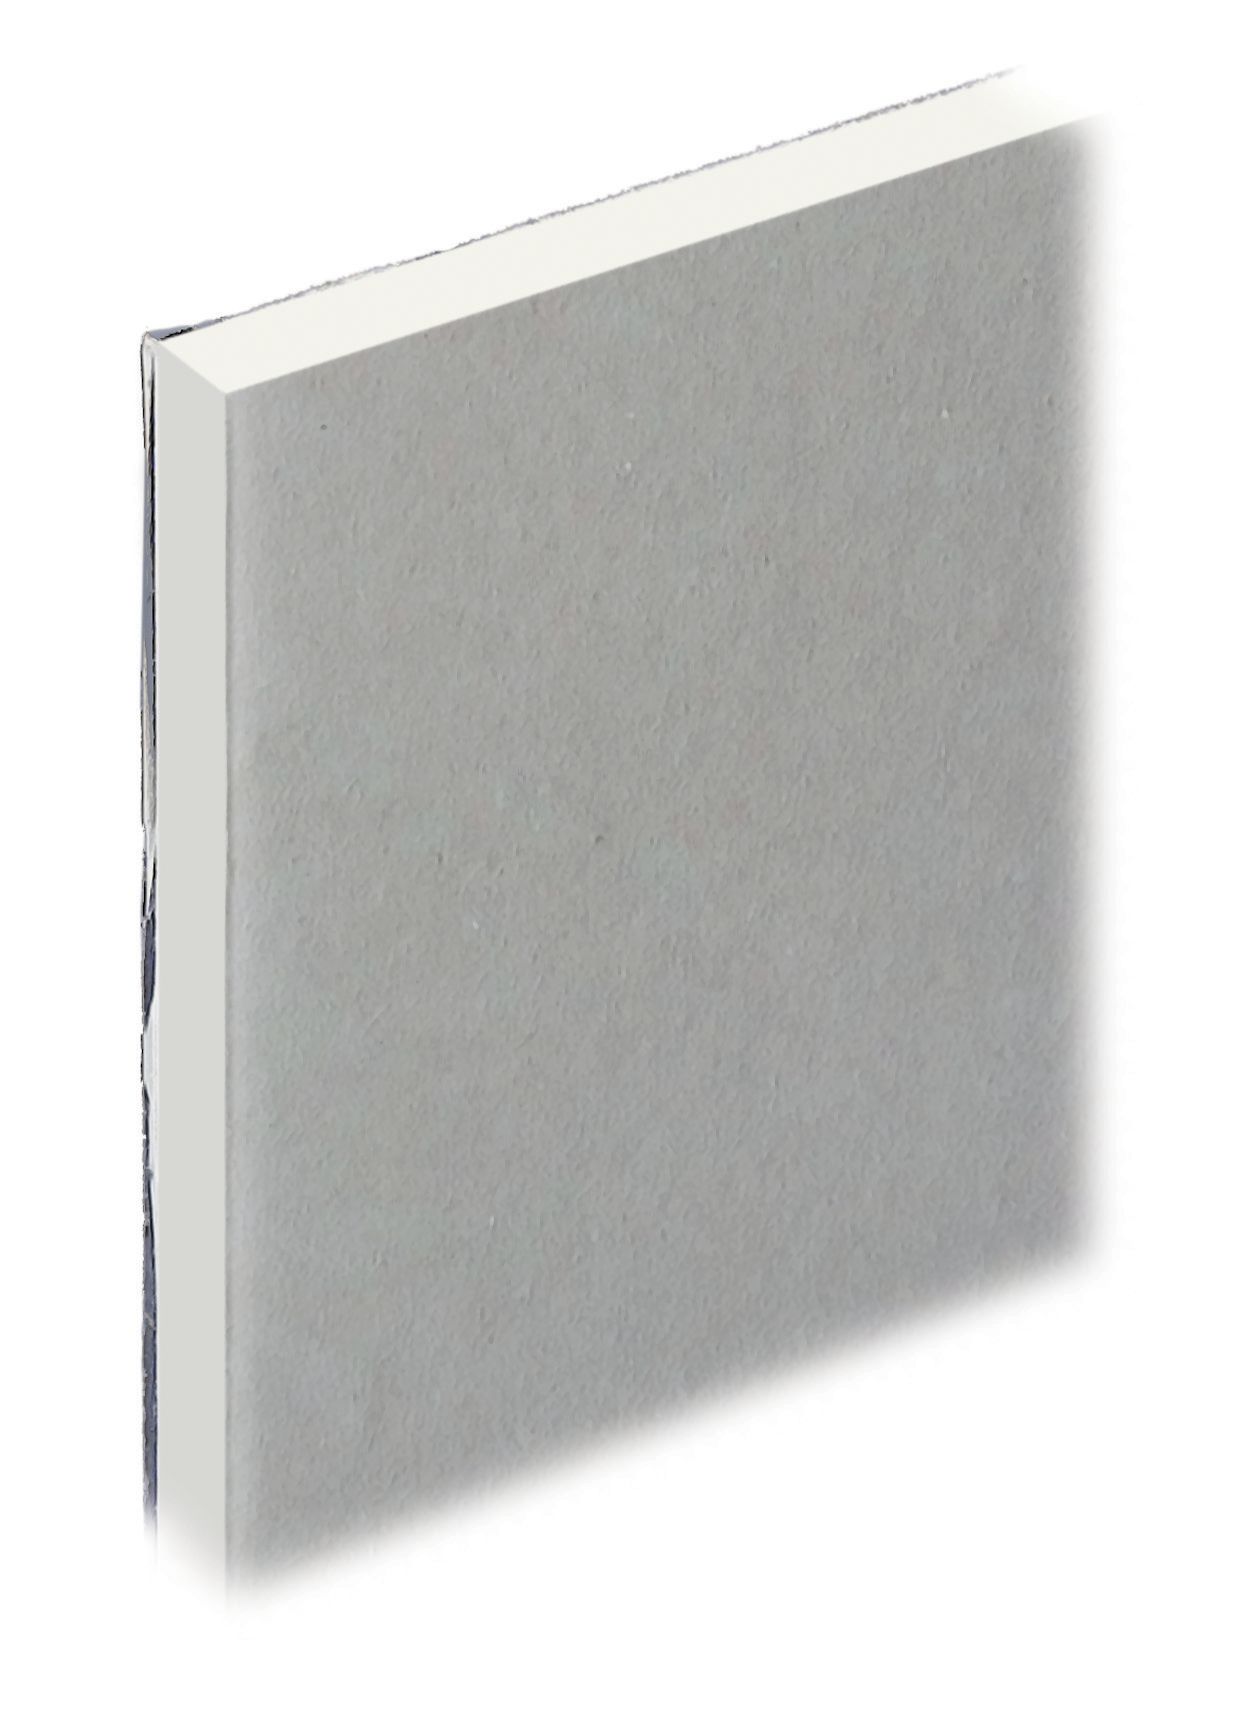 Image of Knauf Vapour Panel Square Edge - 12.5mm x 1.2m x 2.4m